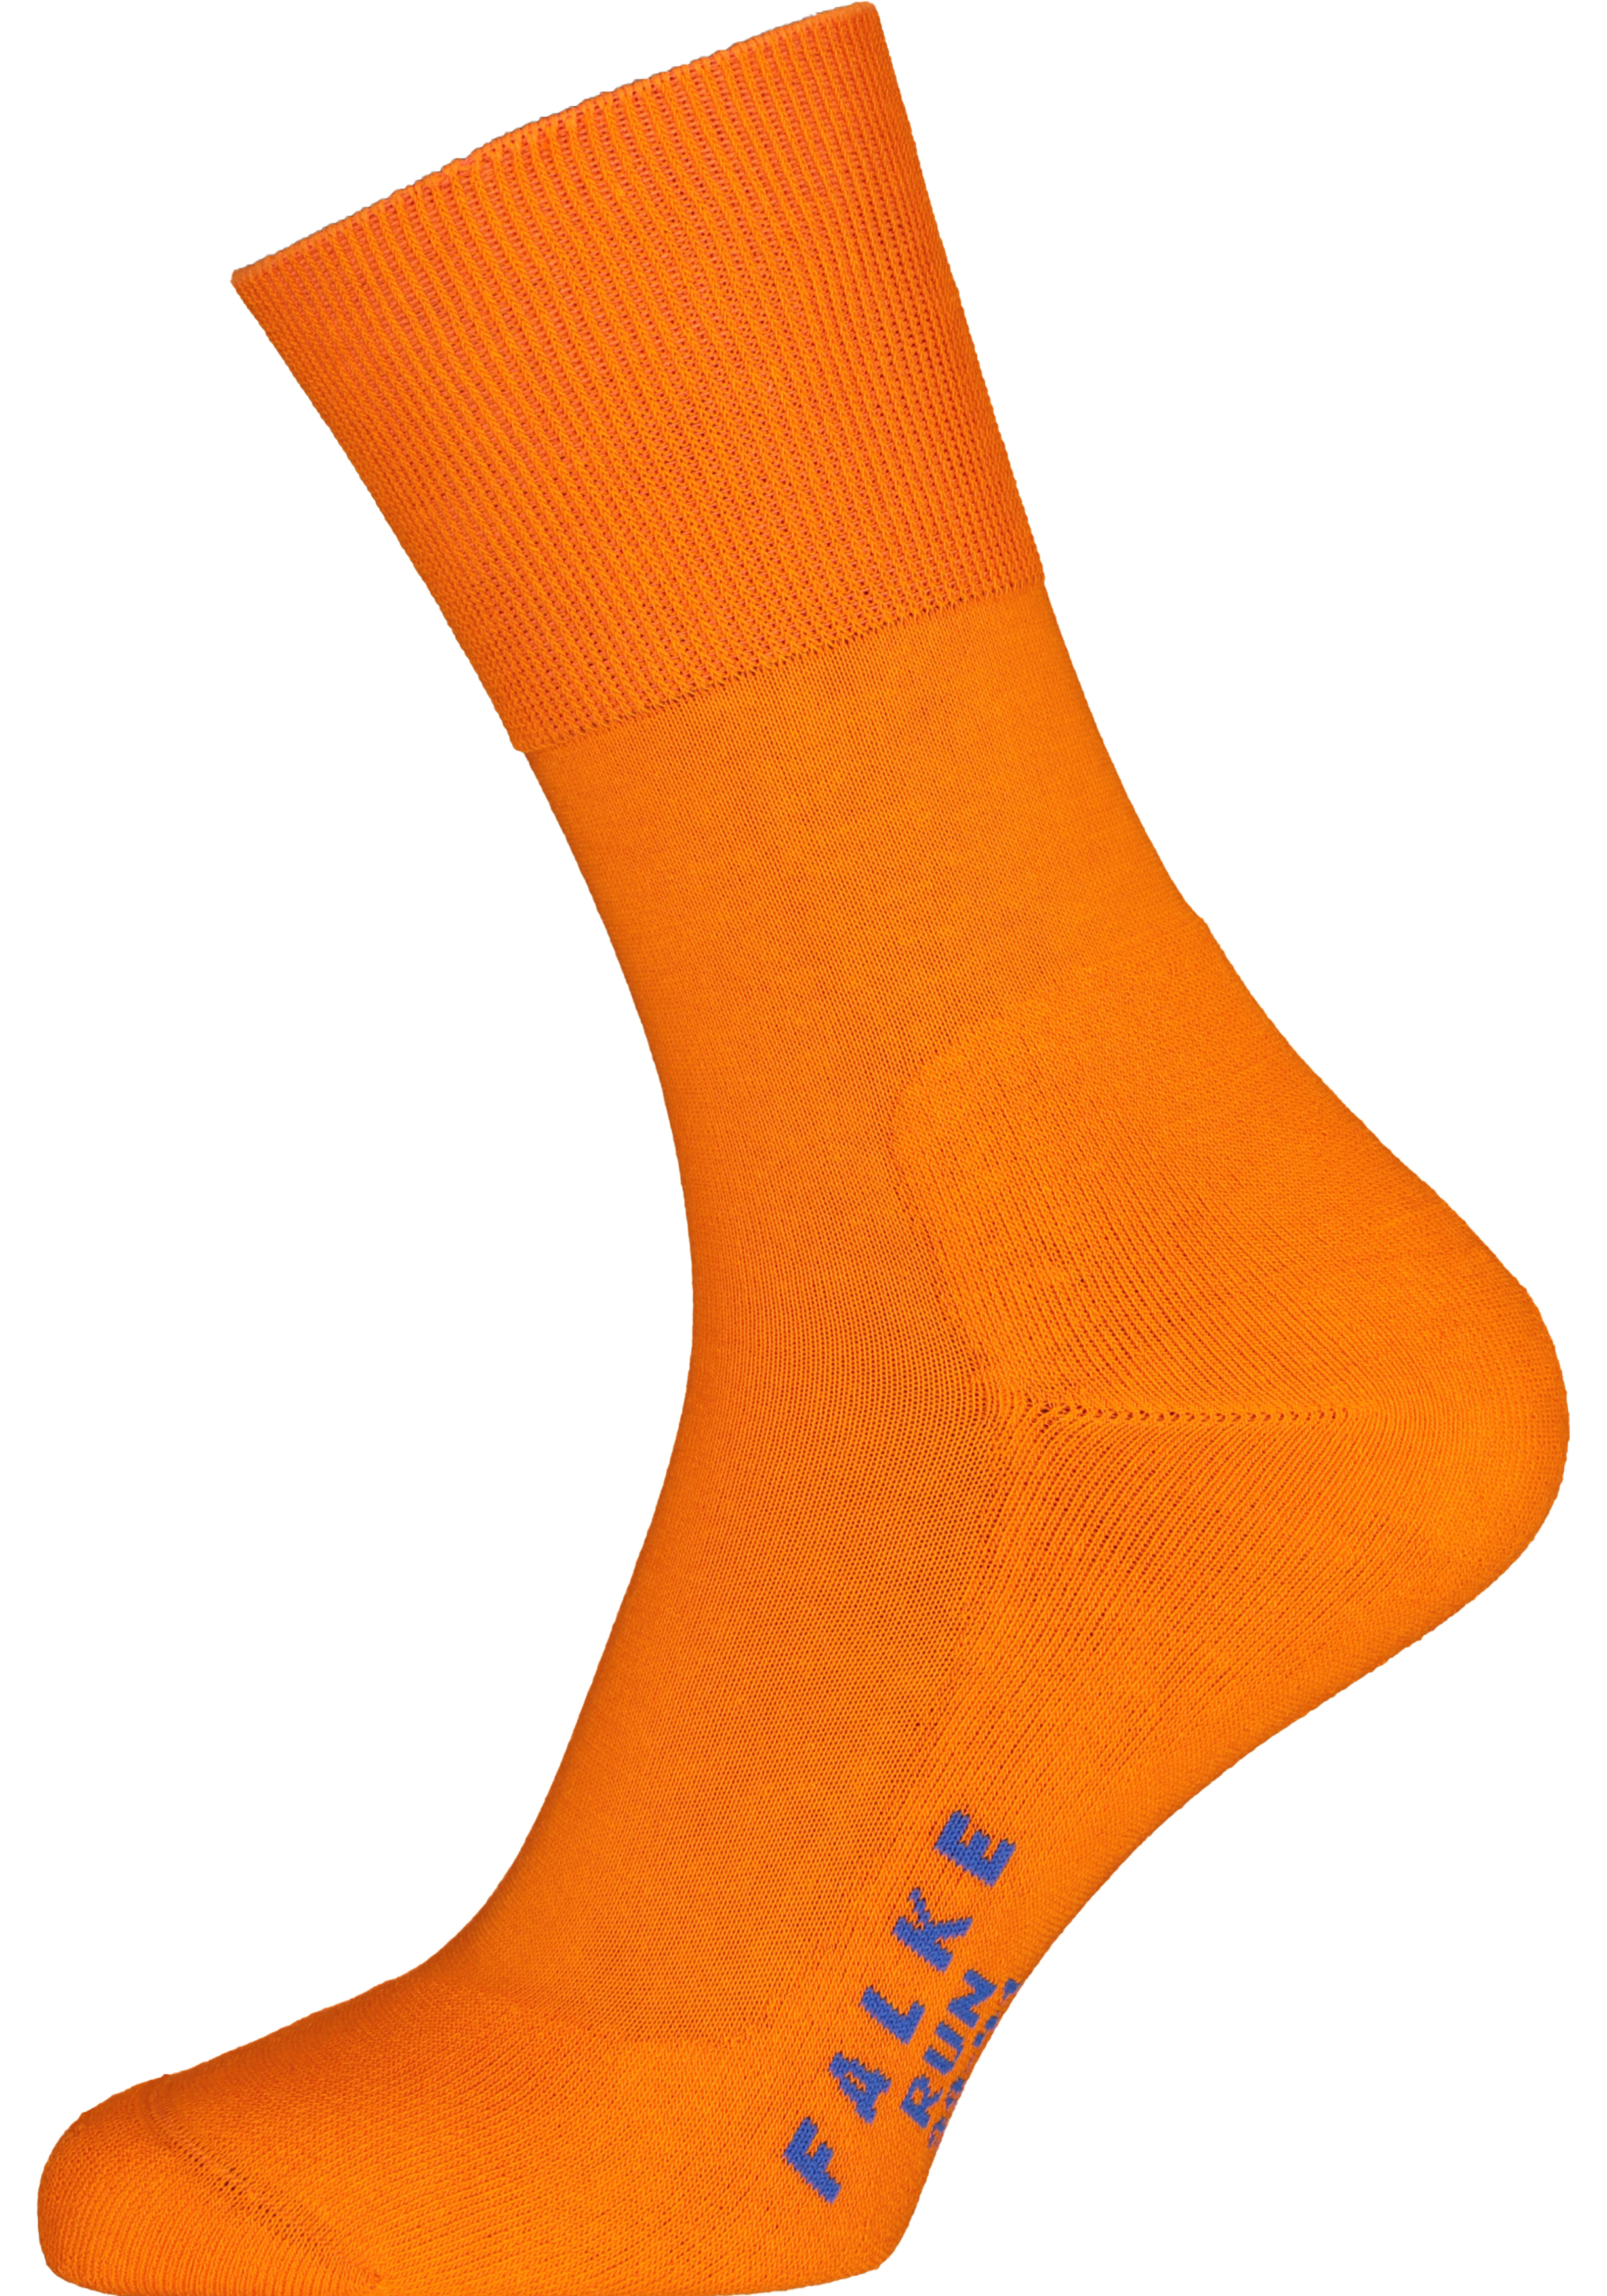 globaal piramide Vorige FALKE Run unisex sokken, oranje (bright orange) - Zomer SALE tot 50% korting